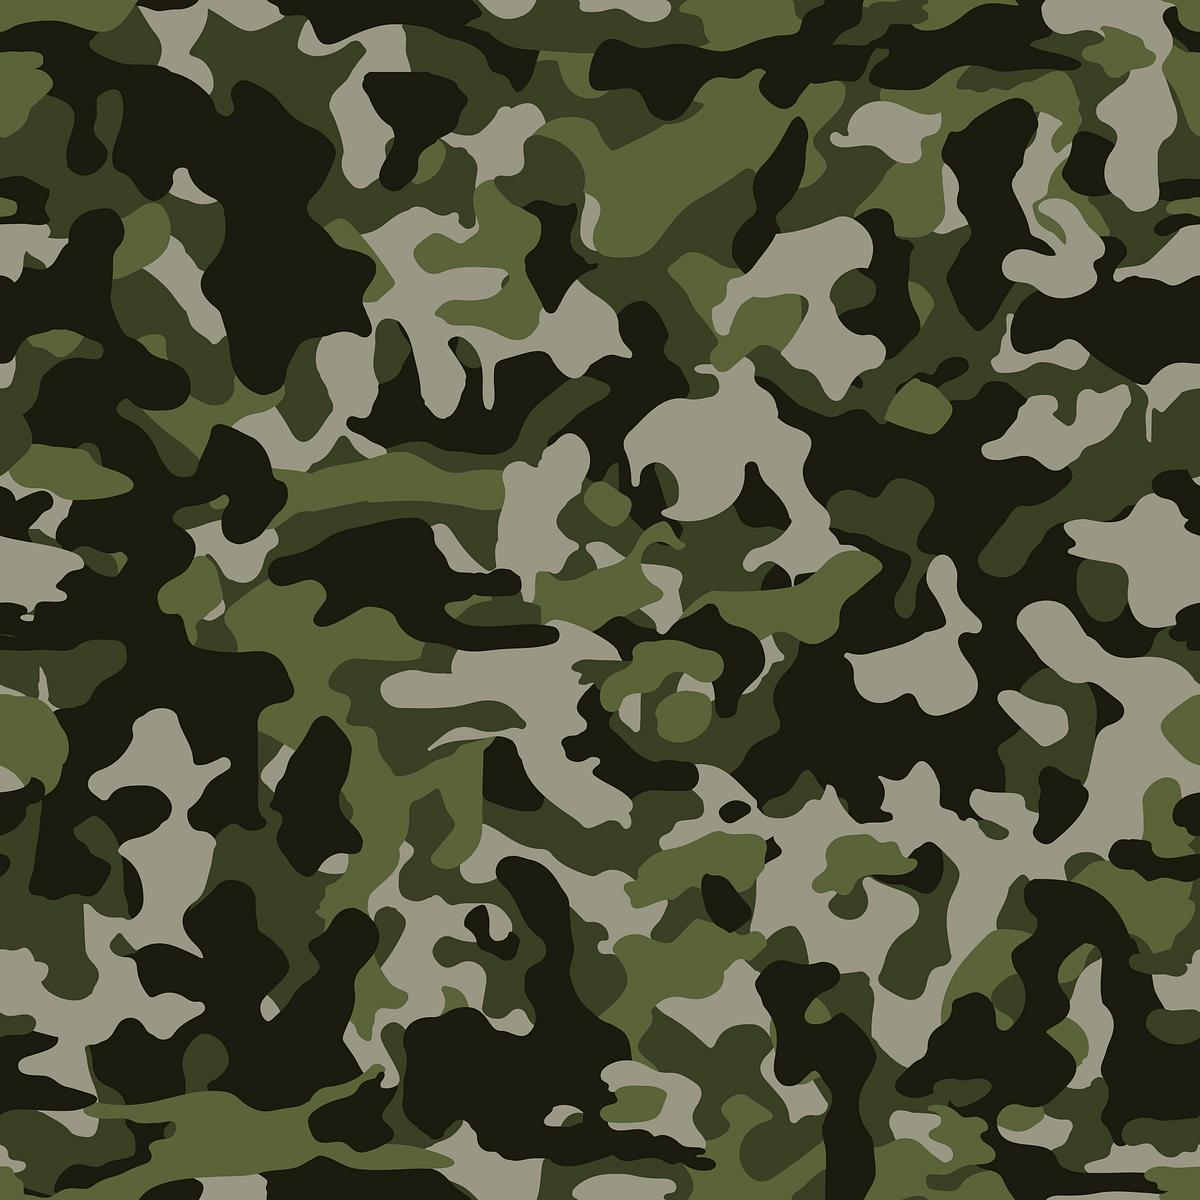 Aesthetic green camo pattern background | Premium Photo - rawpixel